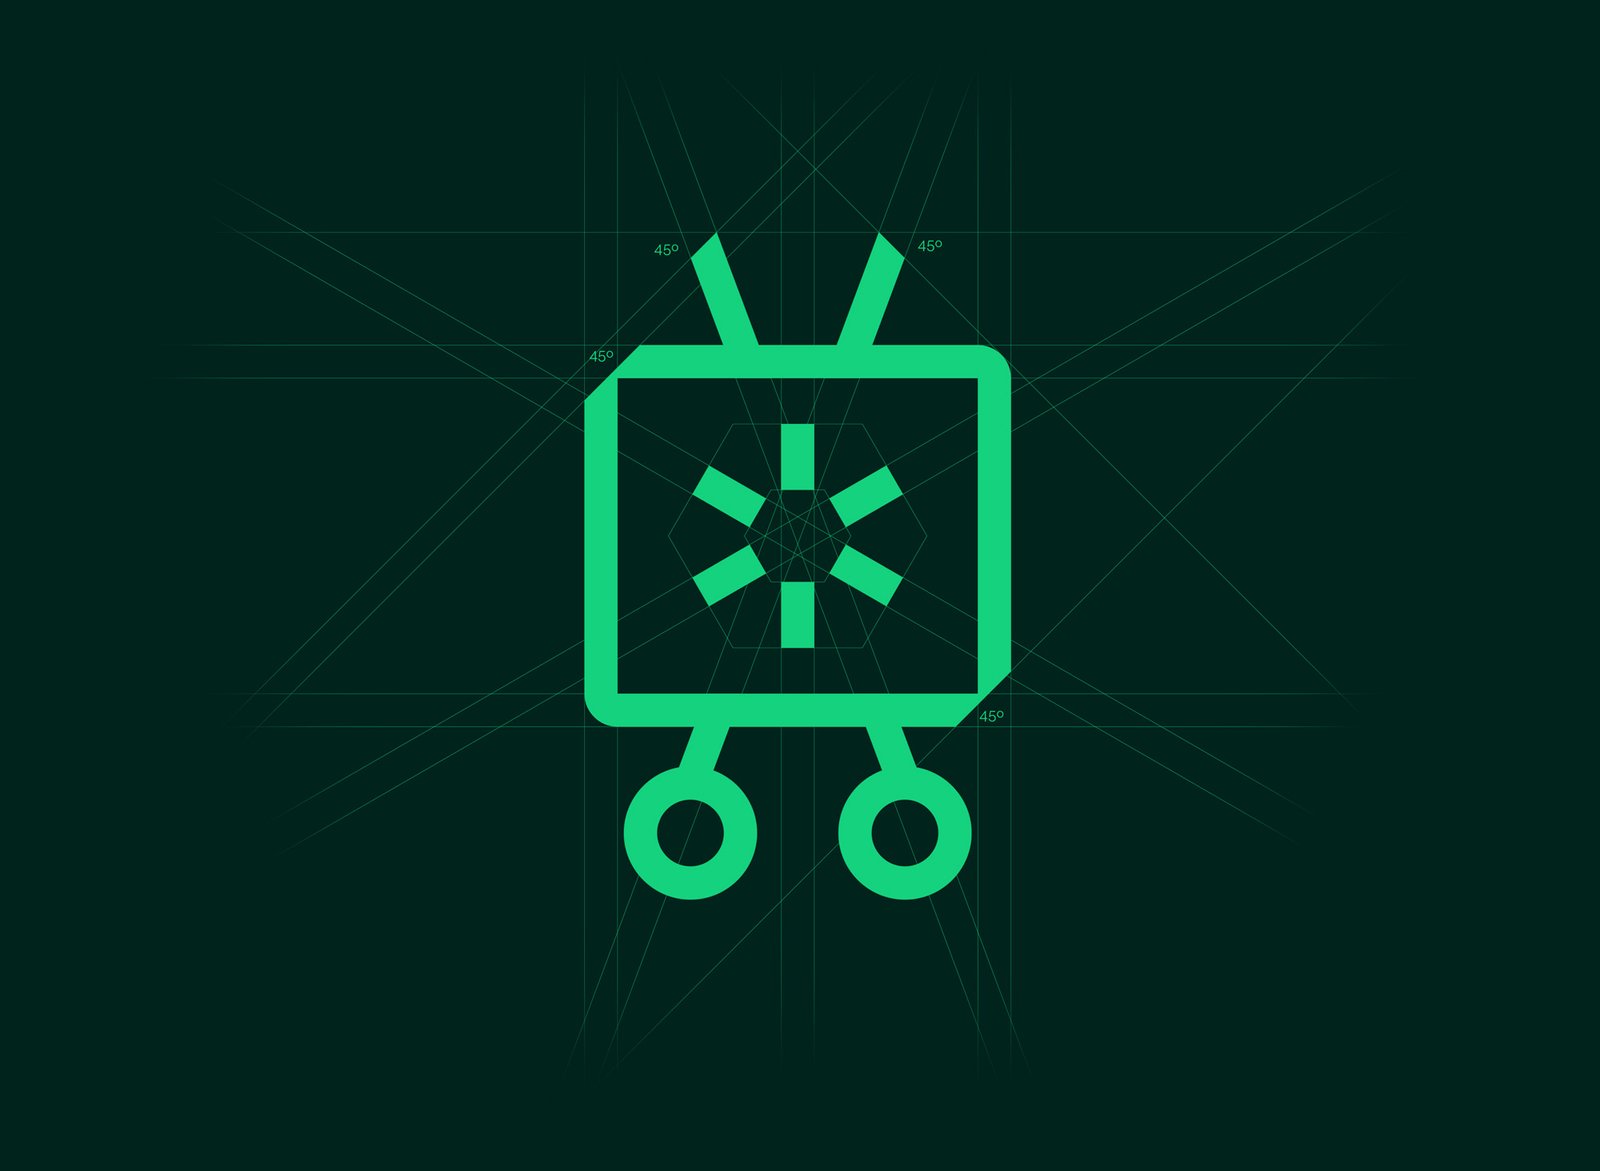 SnapIt logo grid system